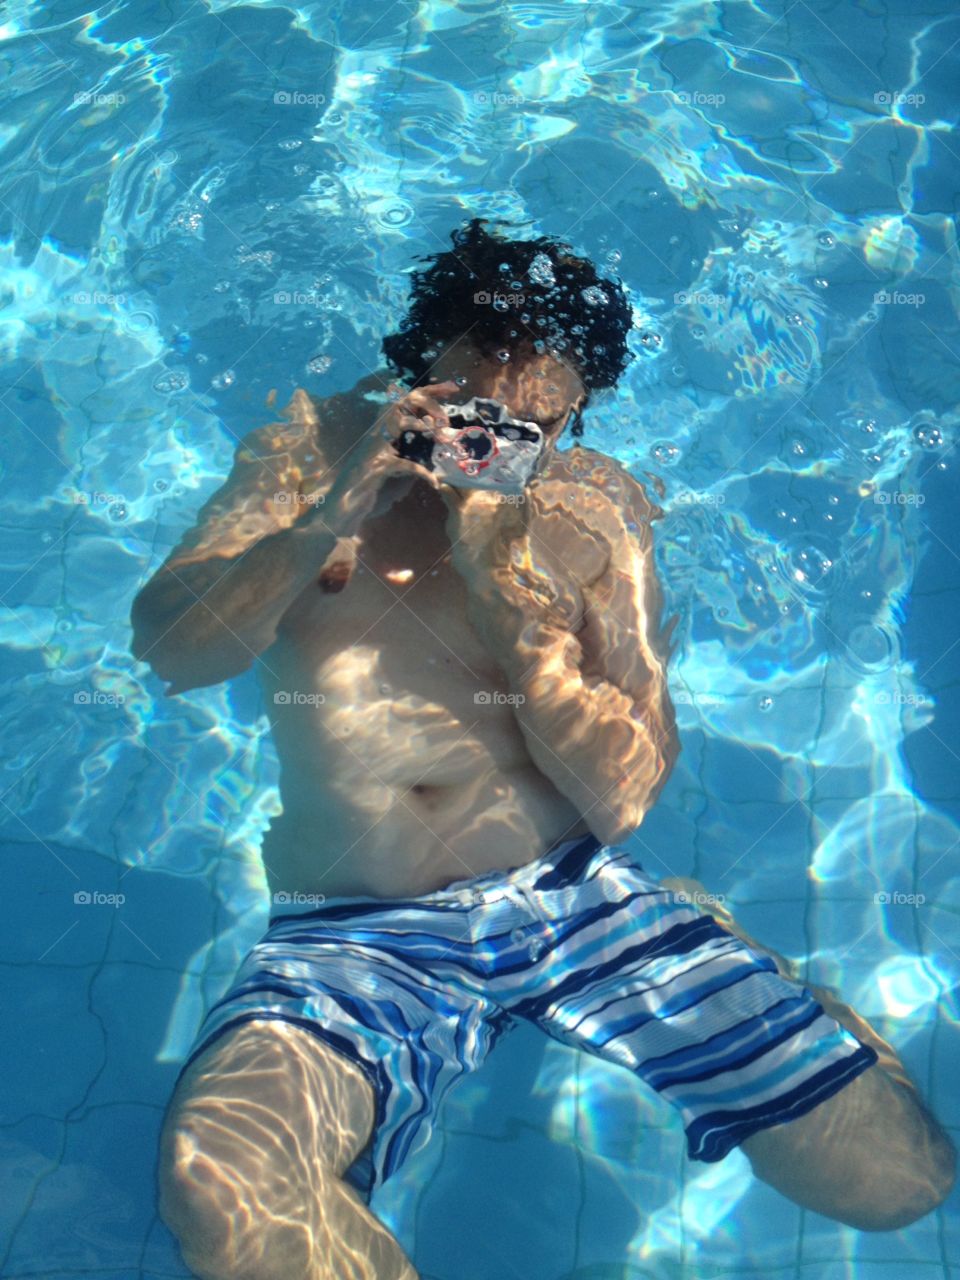 Aquatic pictures . Submerged Photographer!